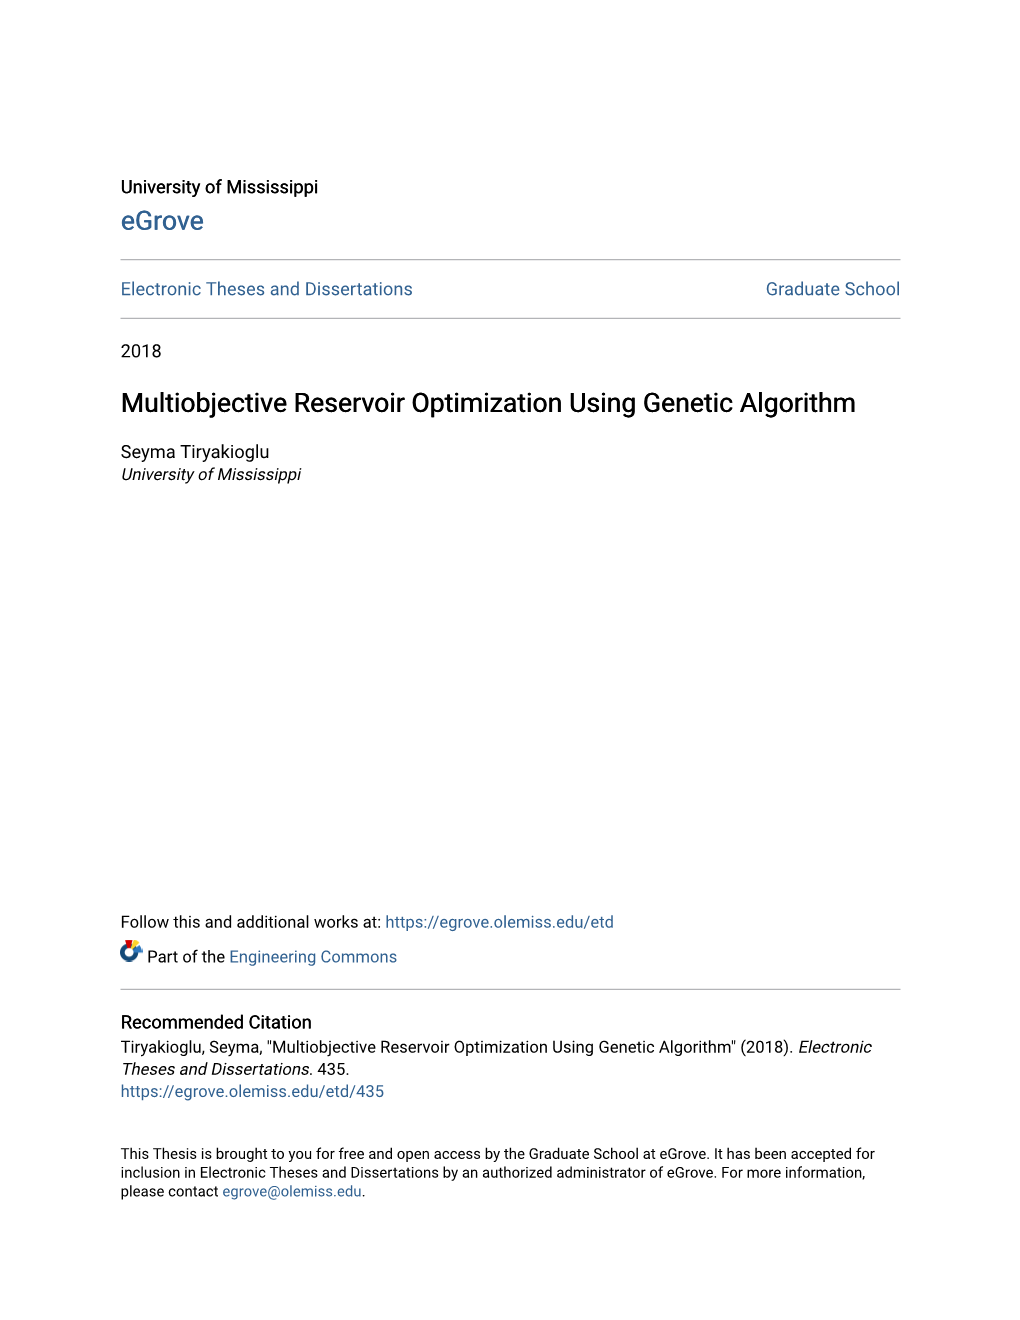 Multiobjective Reservoir Optimization Using Genetic Algorithm